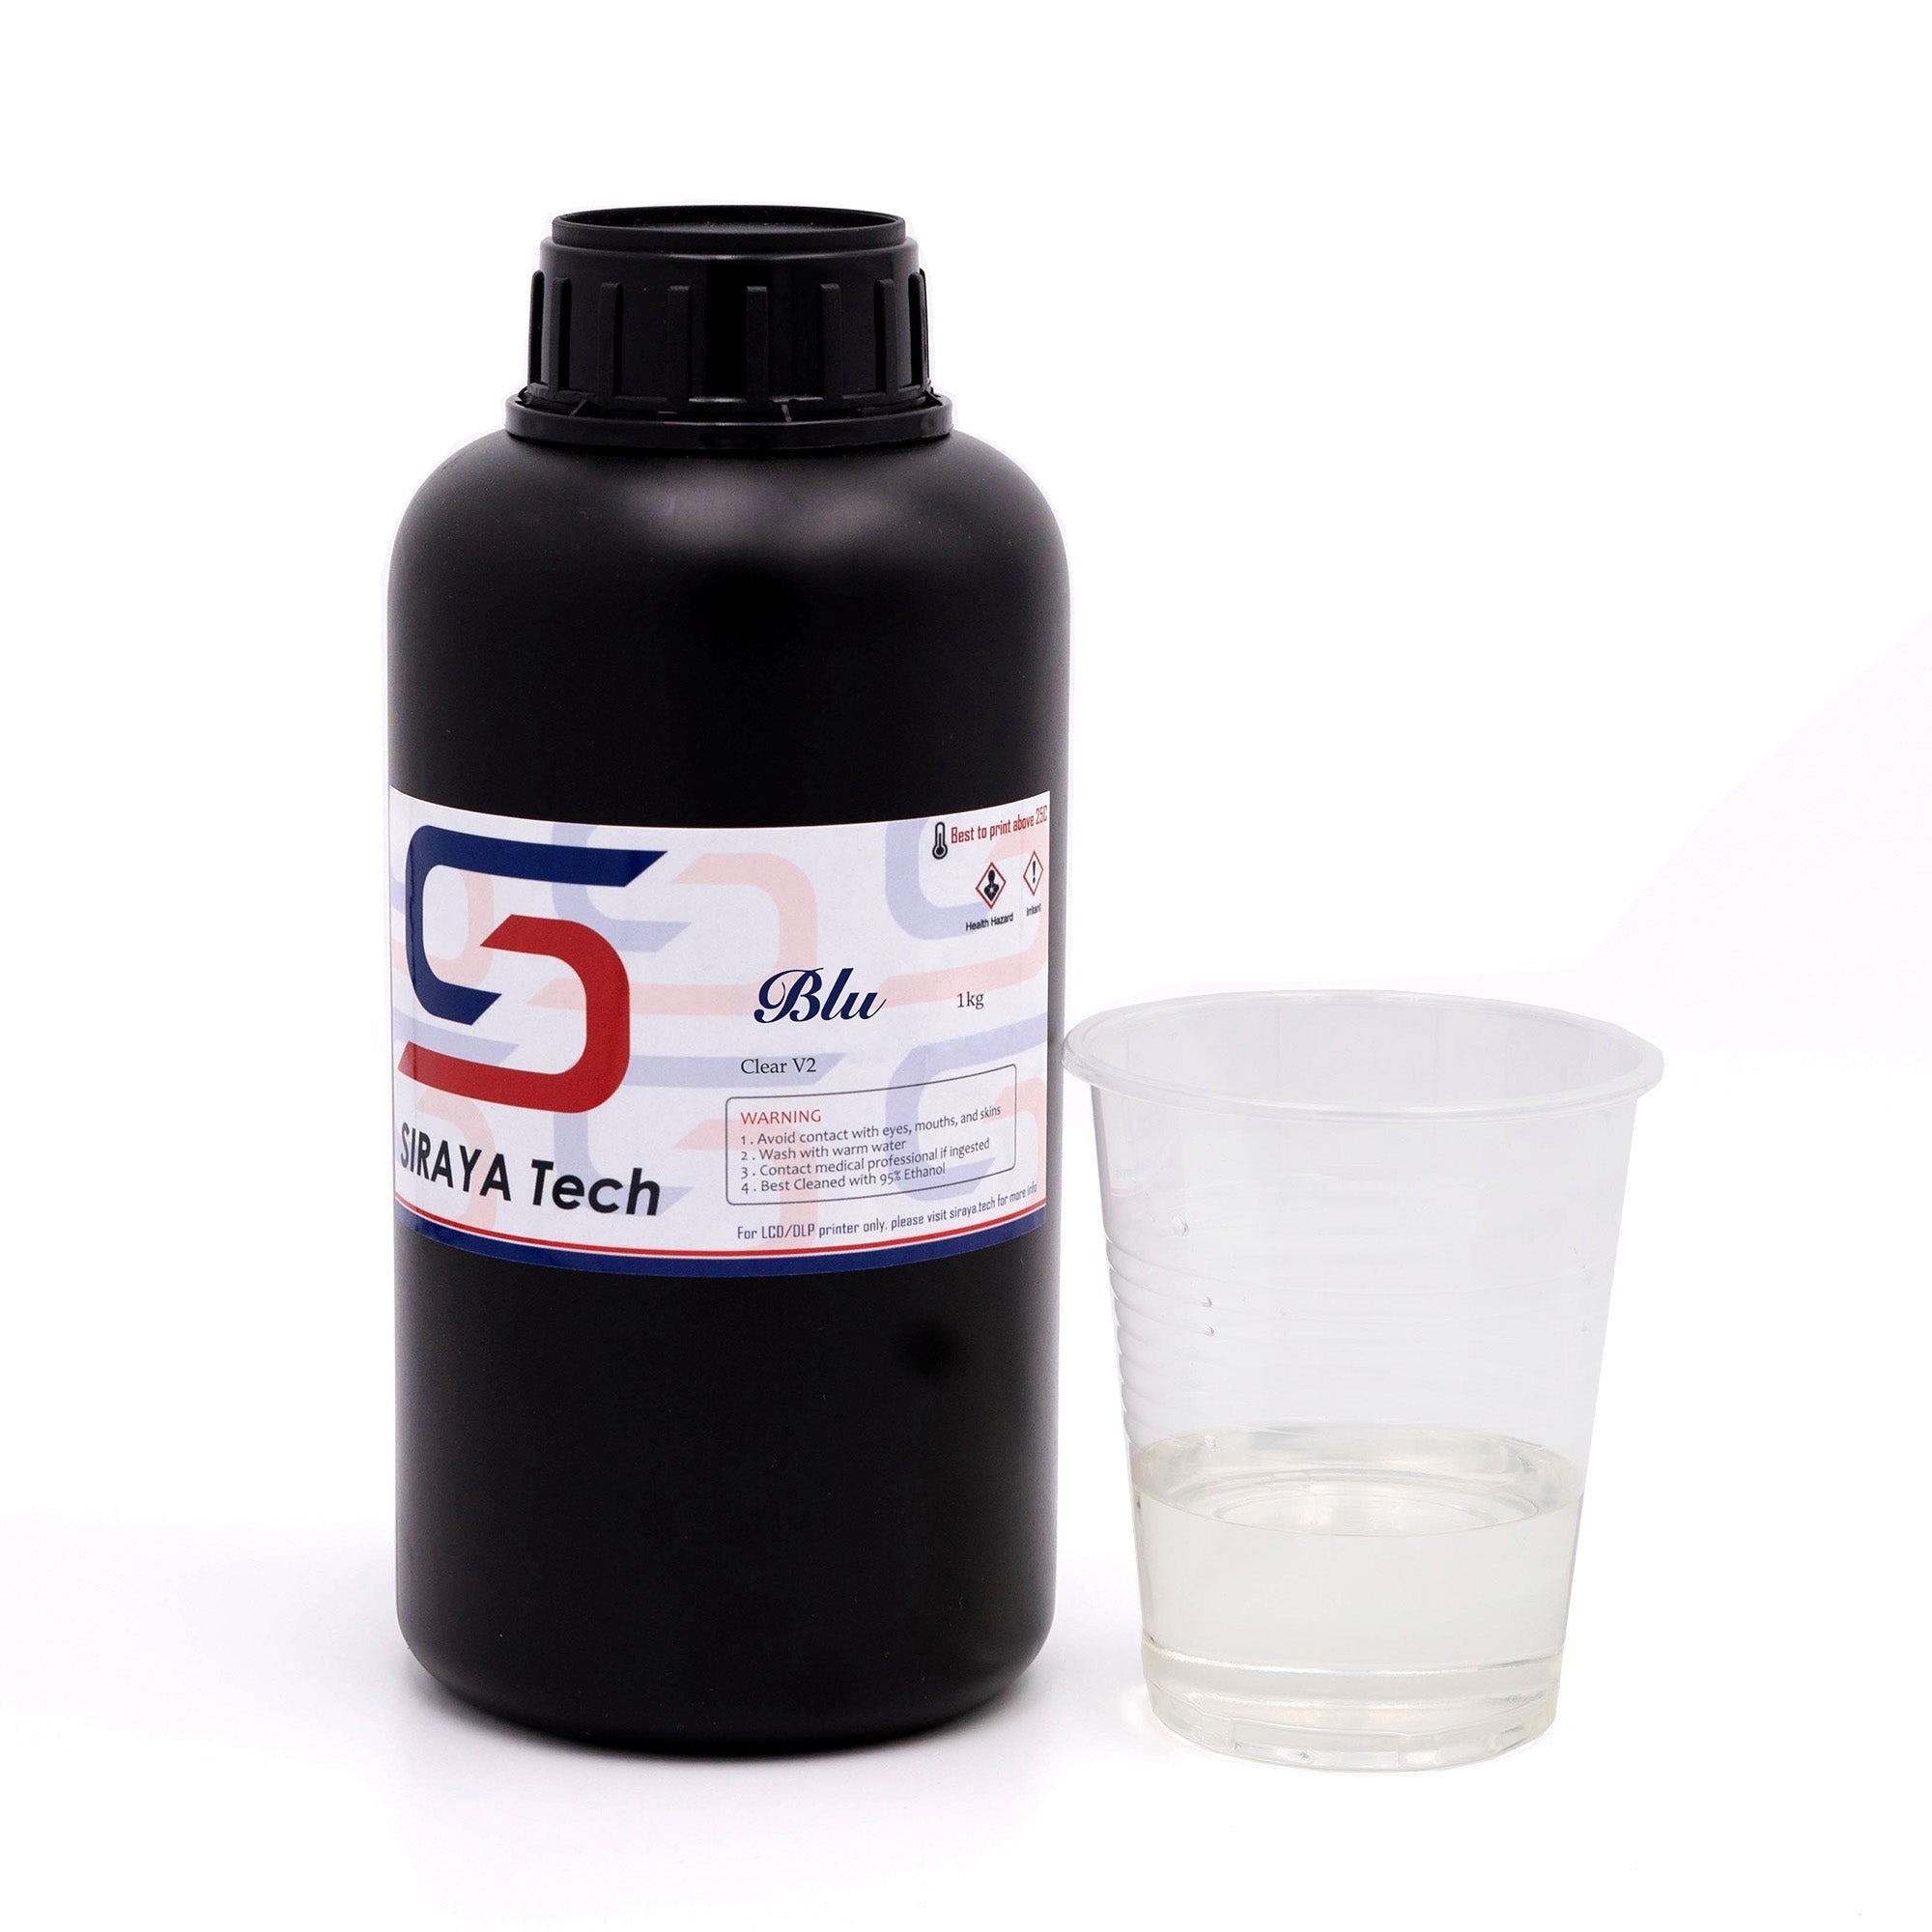 Tough Resin - Blu Clear V2 by Siraya Tech (0.5kg for US)